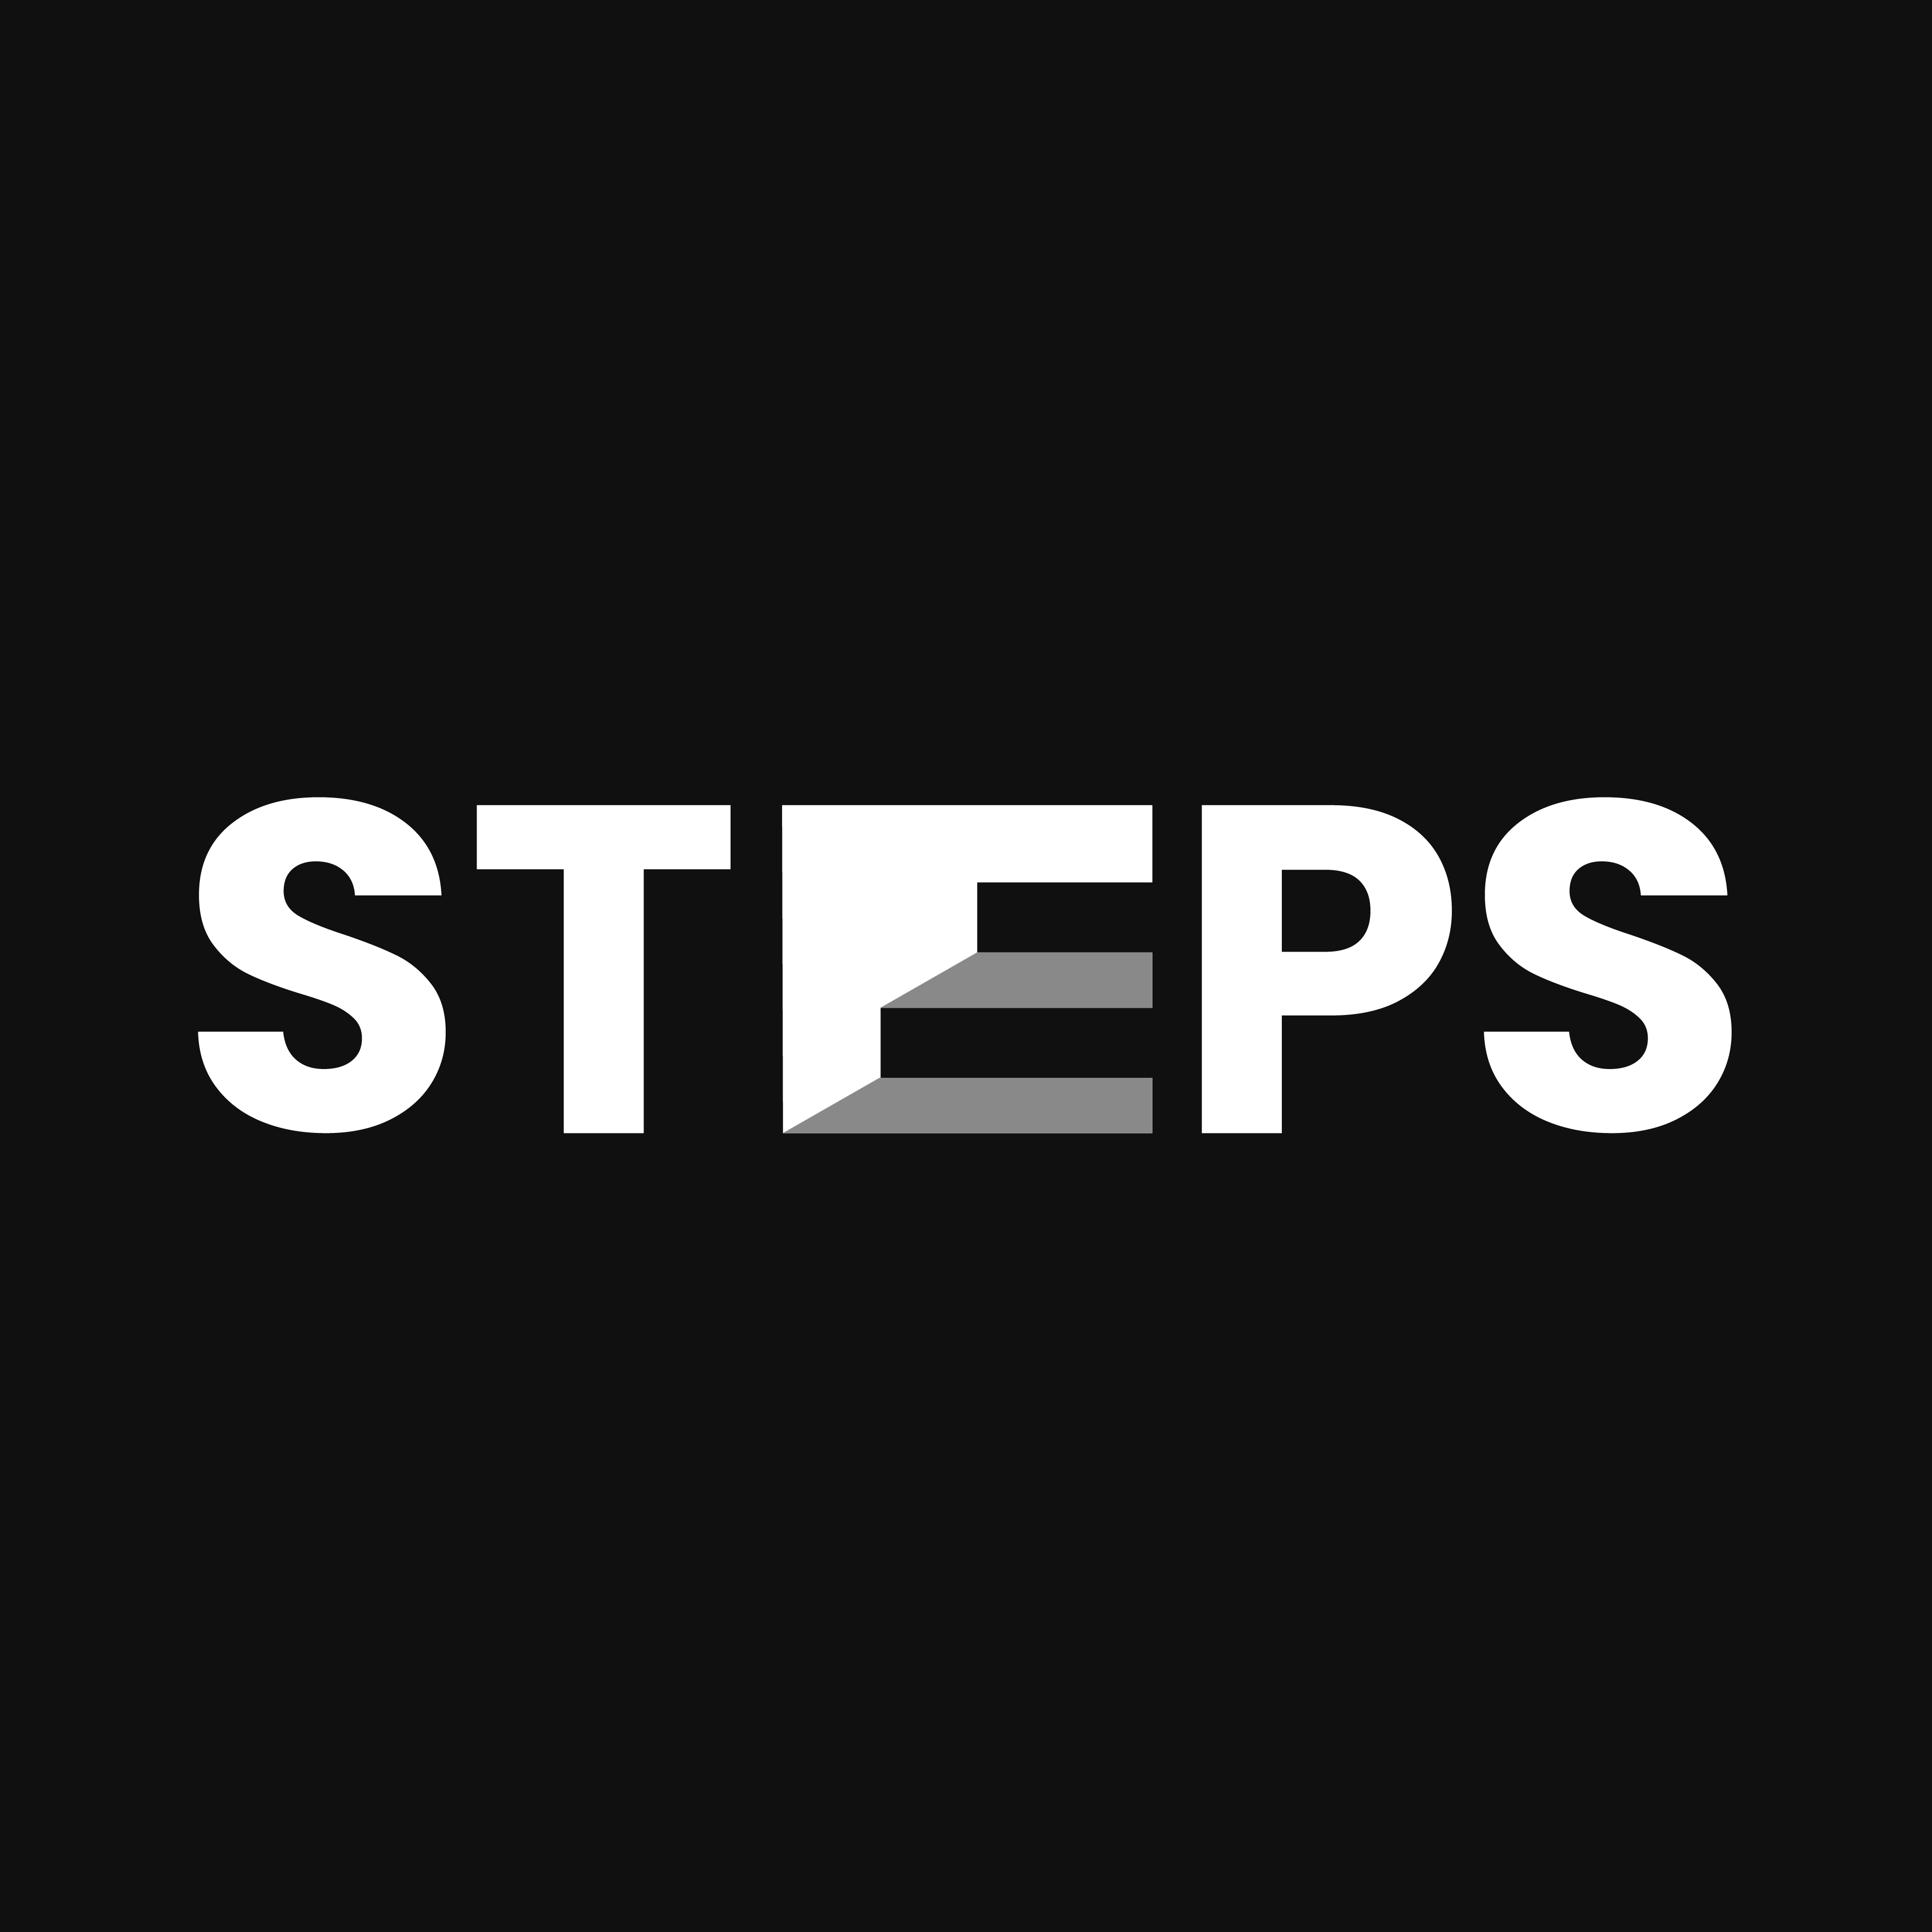 steps logo design by logo designer logorilla for your inspiration and for the worlds largest logo competition